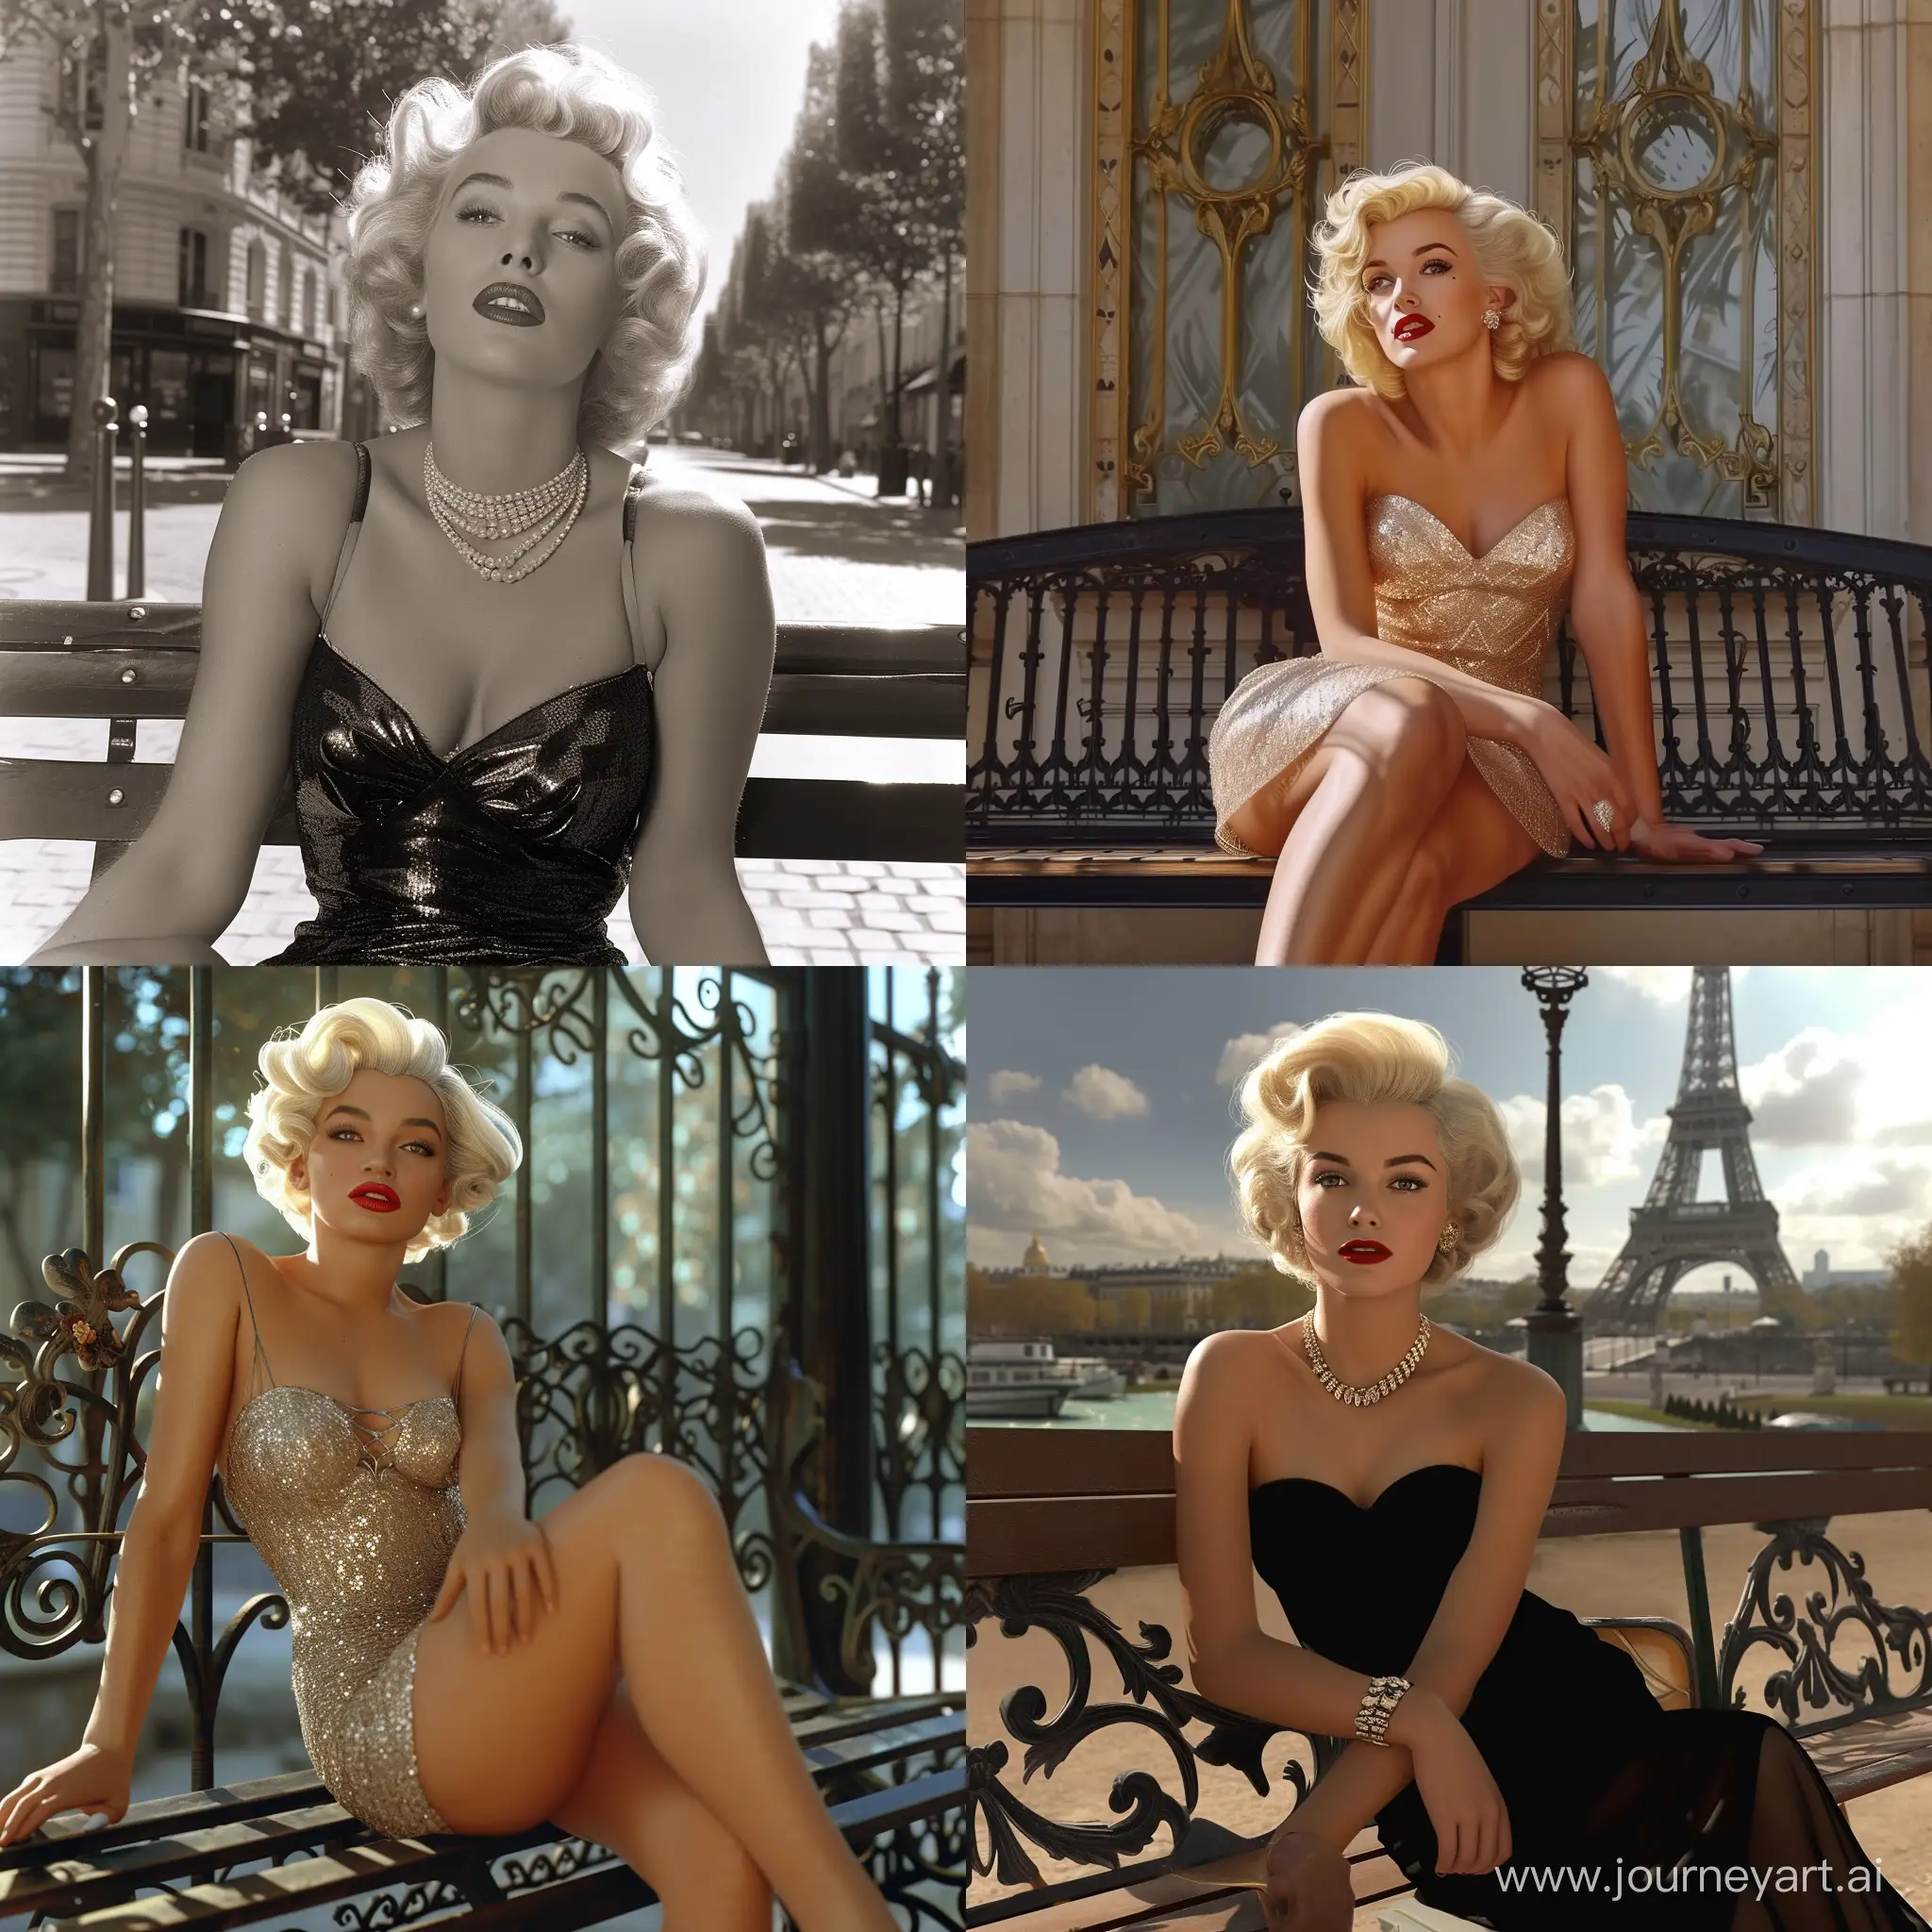 Marilyn Monroe on a Parisian bench, photorealistic, 50s